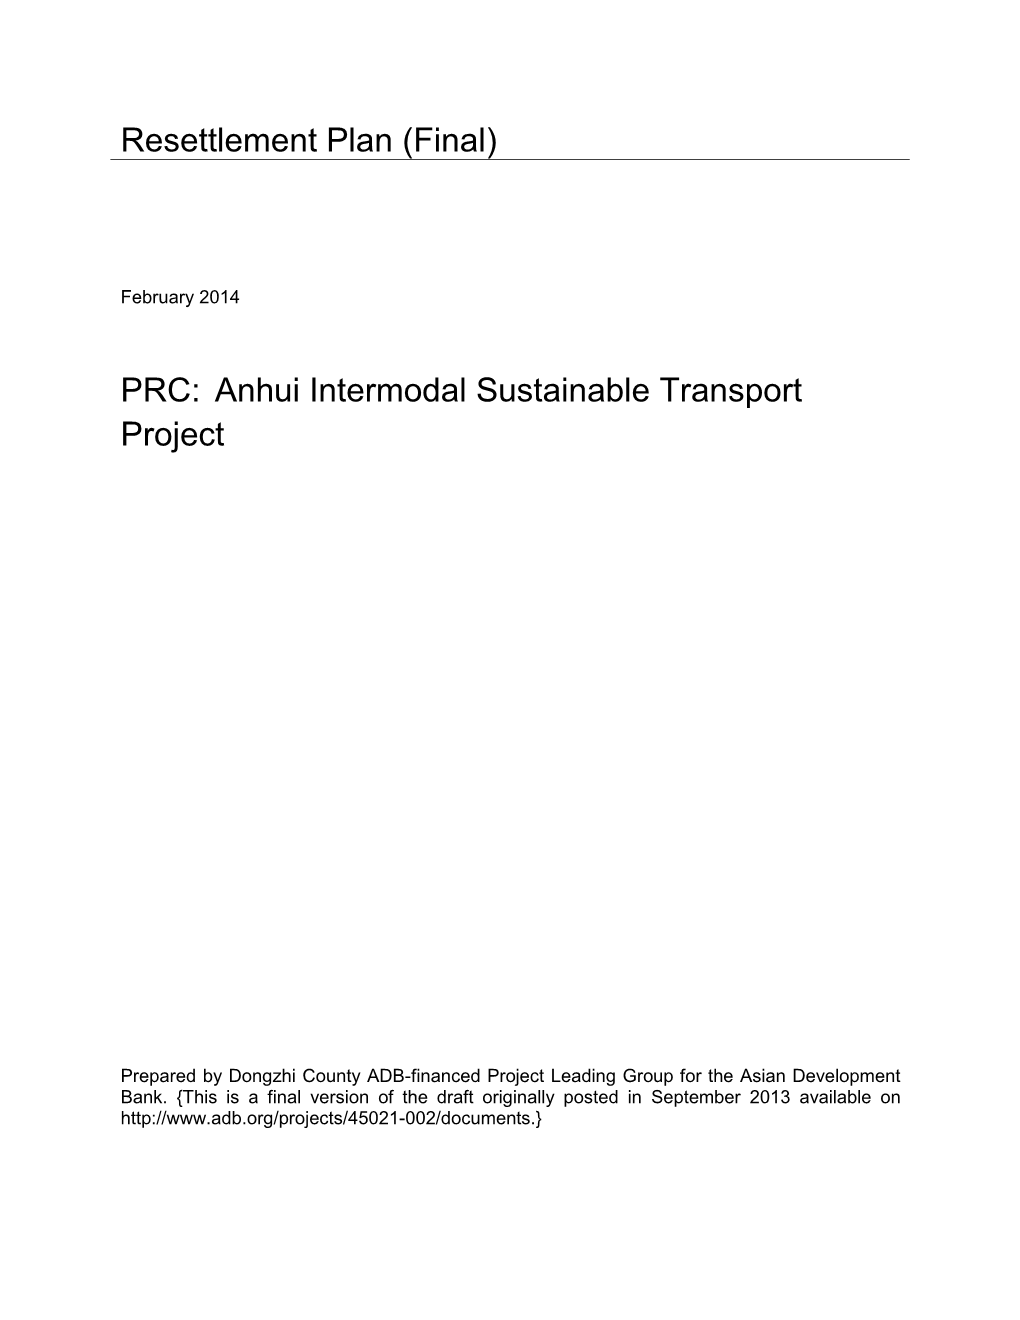 45021-002: Anhui Intermodal Sustainable Transport Development